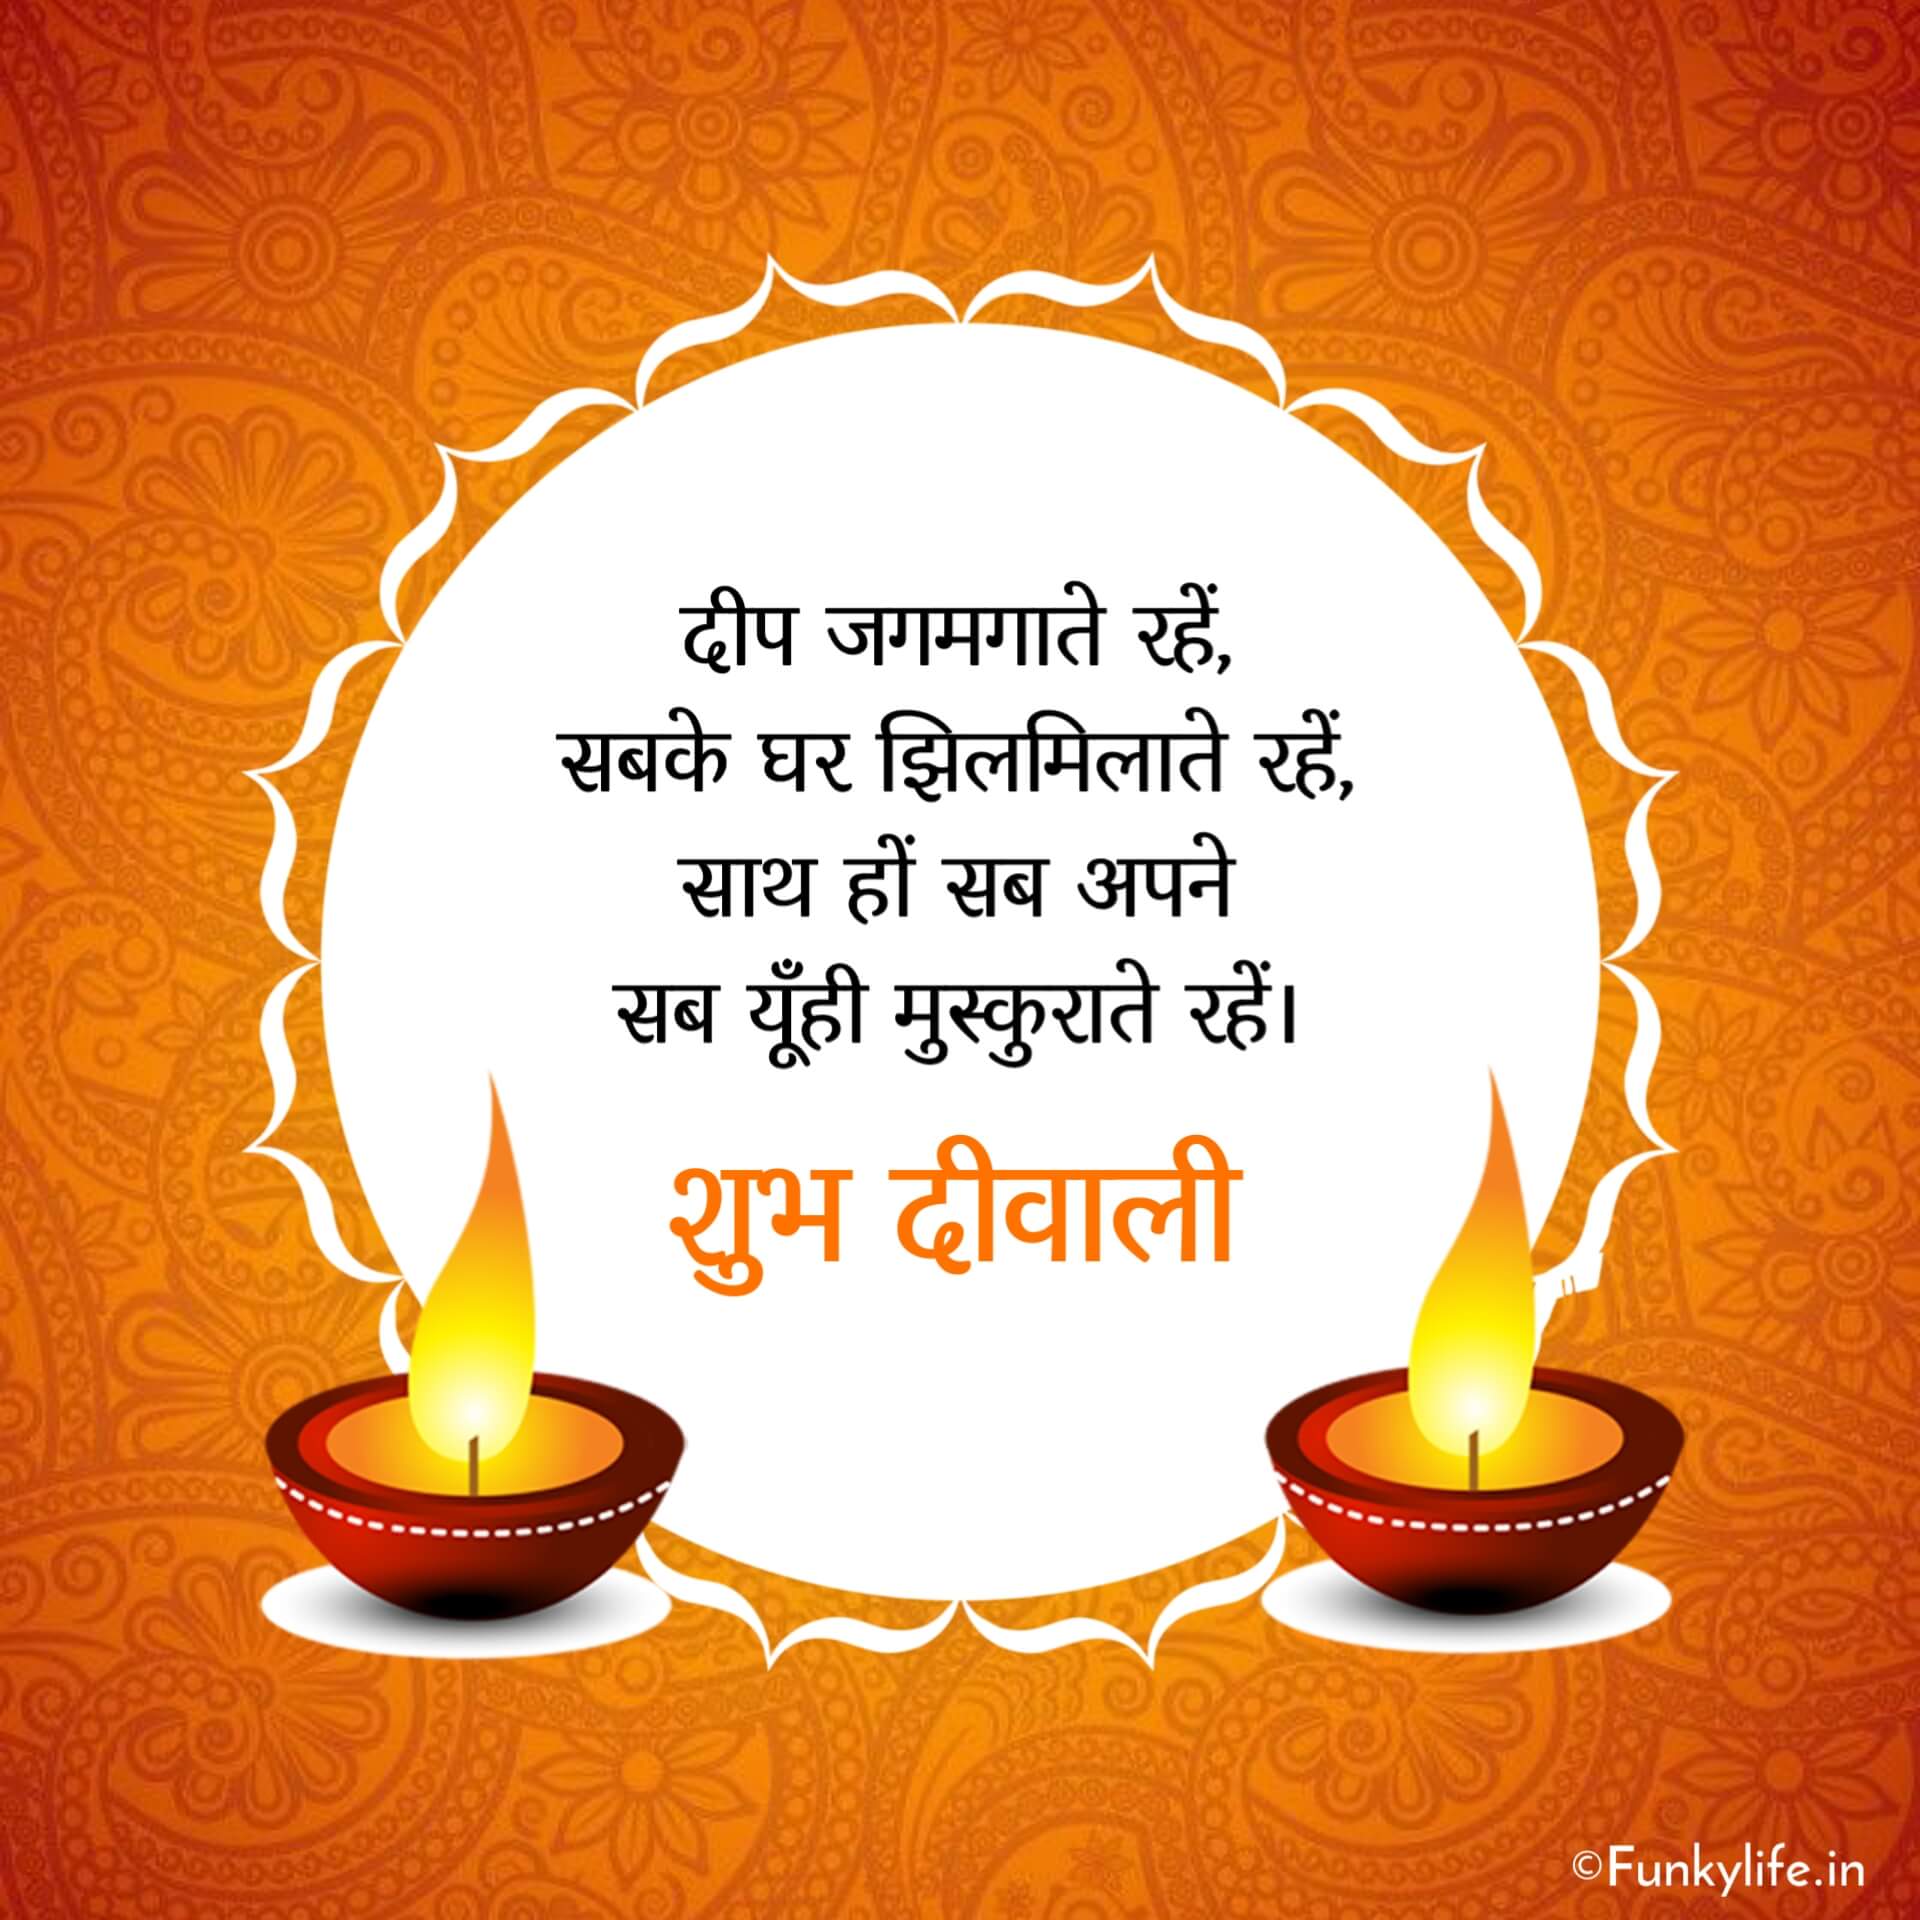 Diwali Wishes Image in Hindi